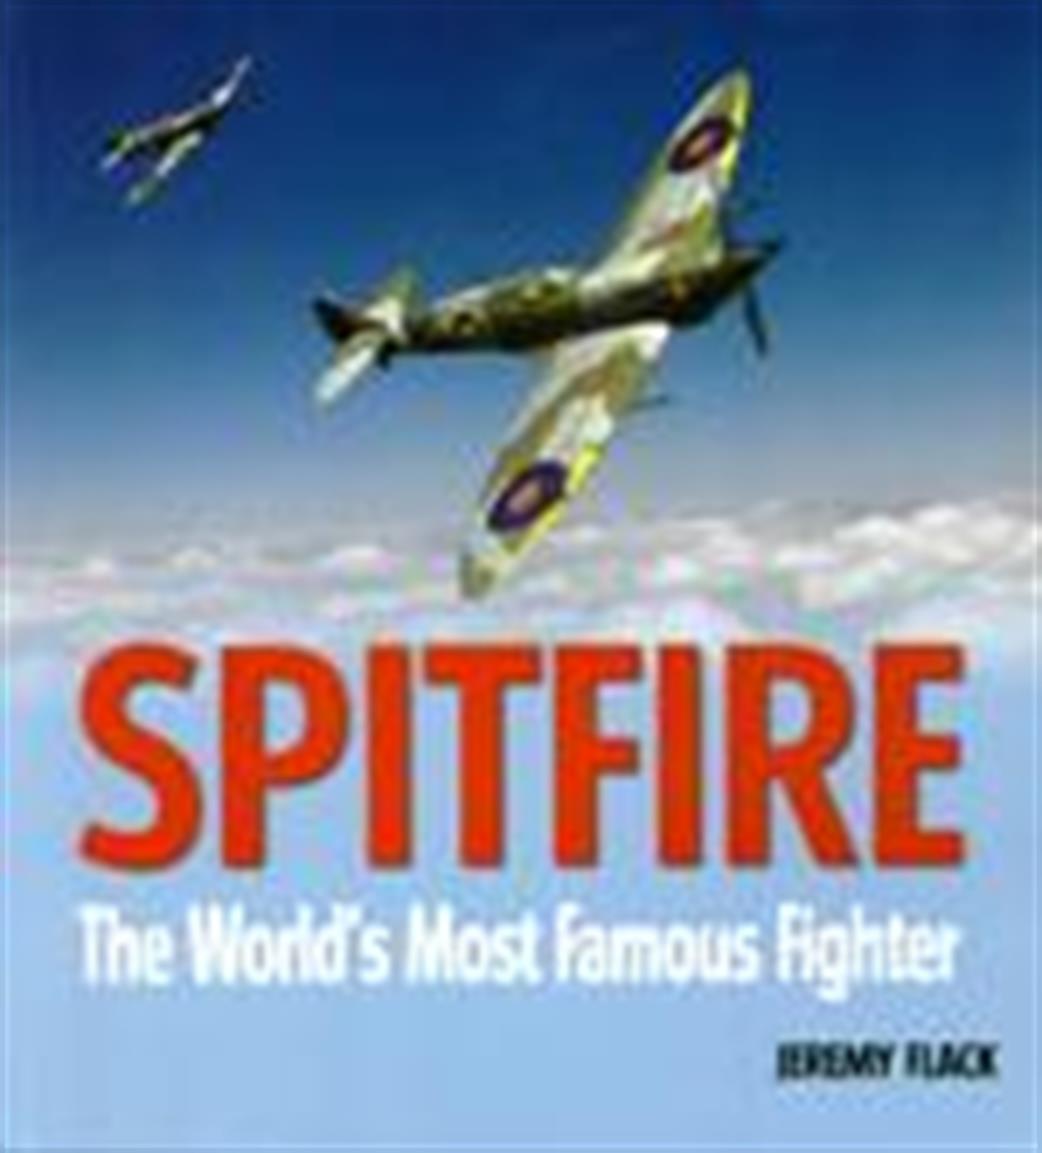 9780753729779 Spitfire Worlds Most Famous Fighter by Jeremy Flack